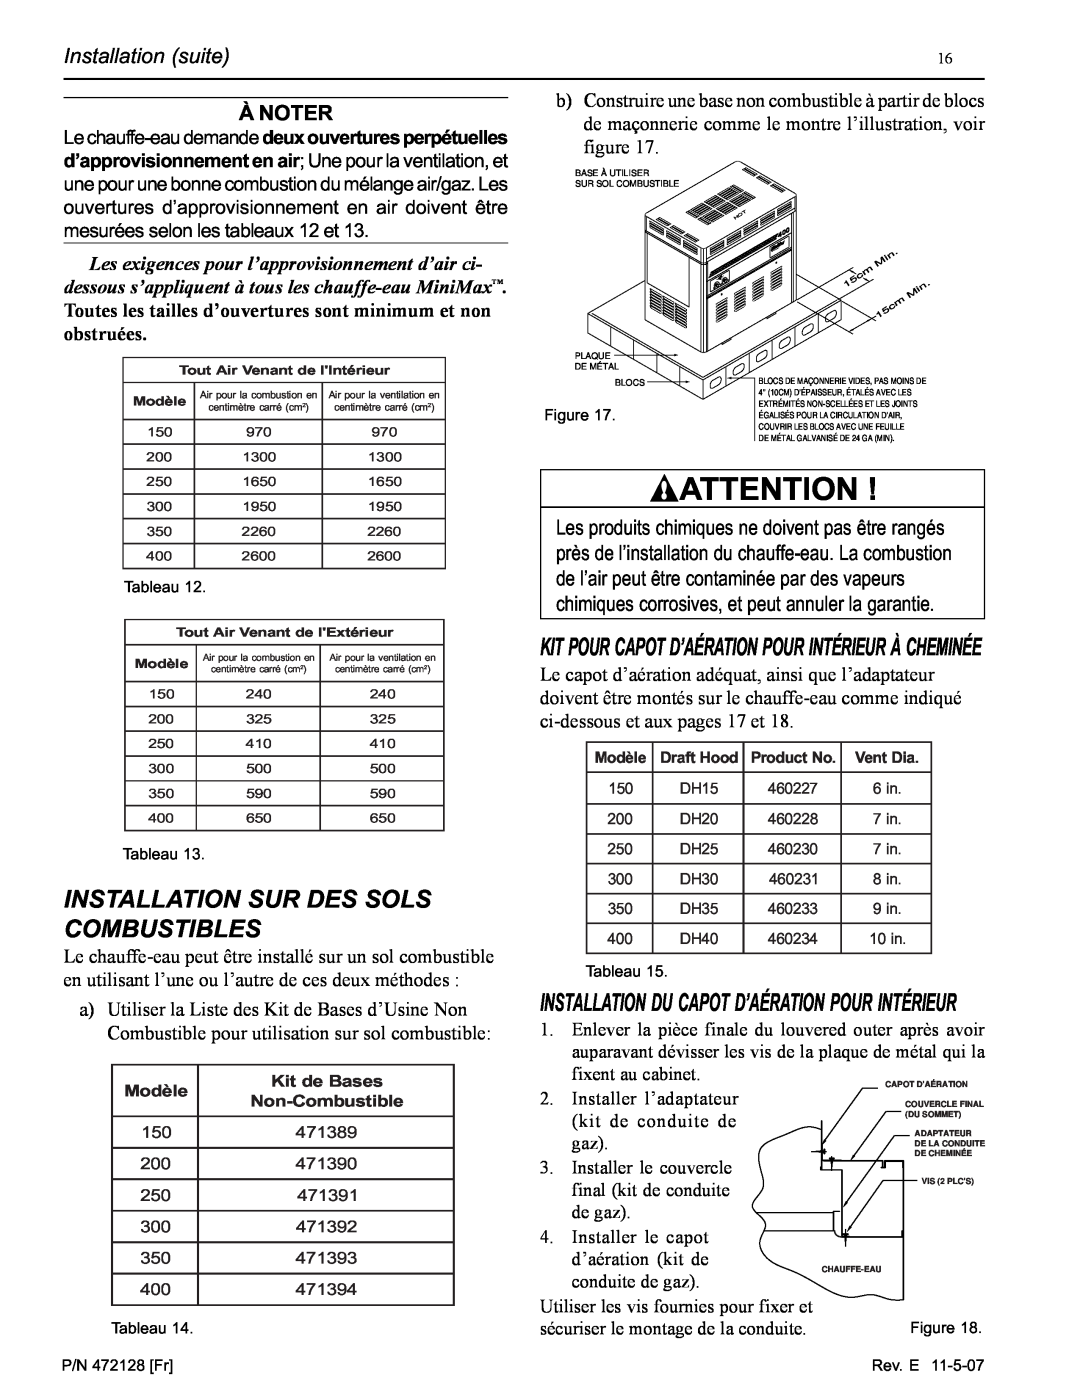 Pentair Hot Tub manual Installation Sur Des Sols Combustibles, Installation suite À NOTER 